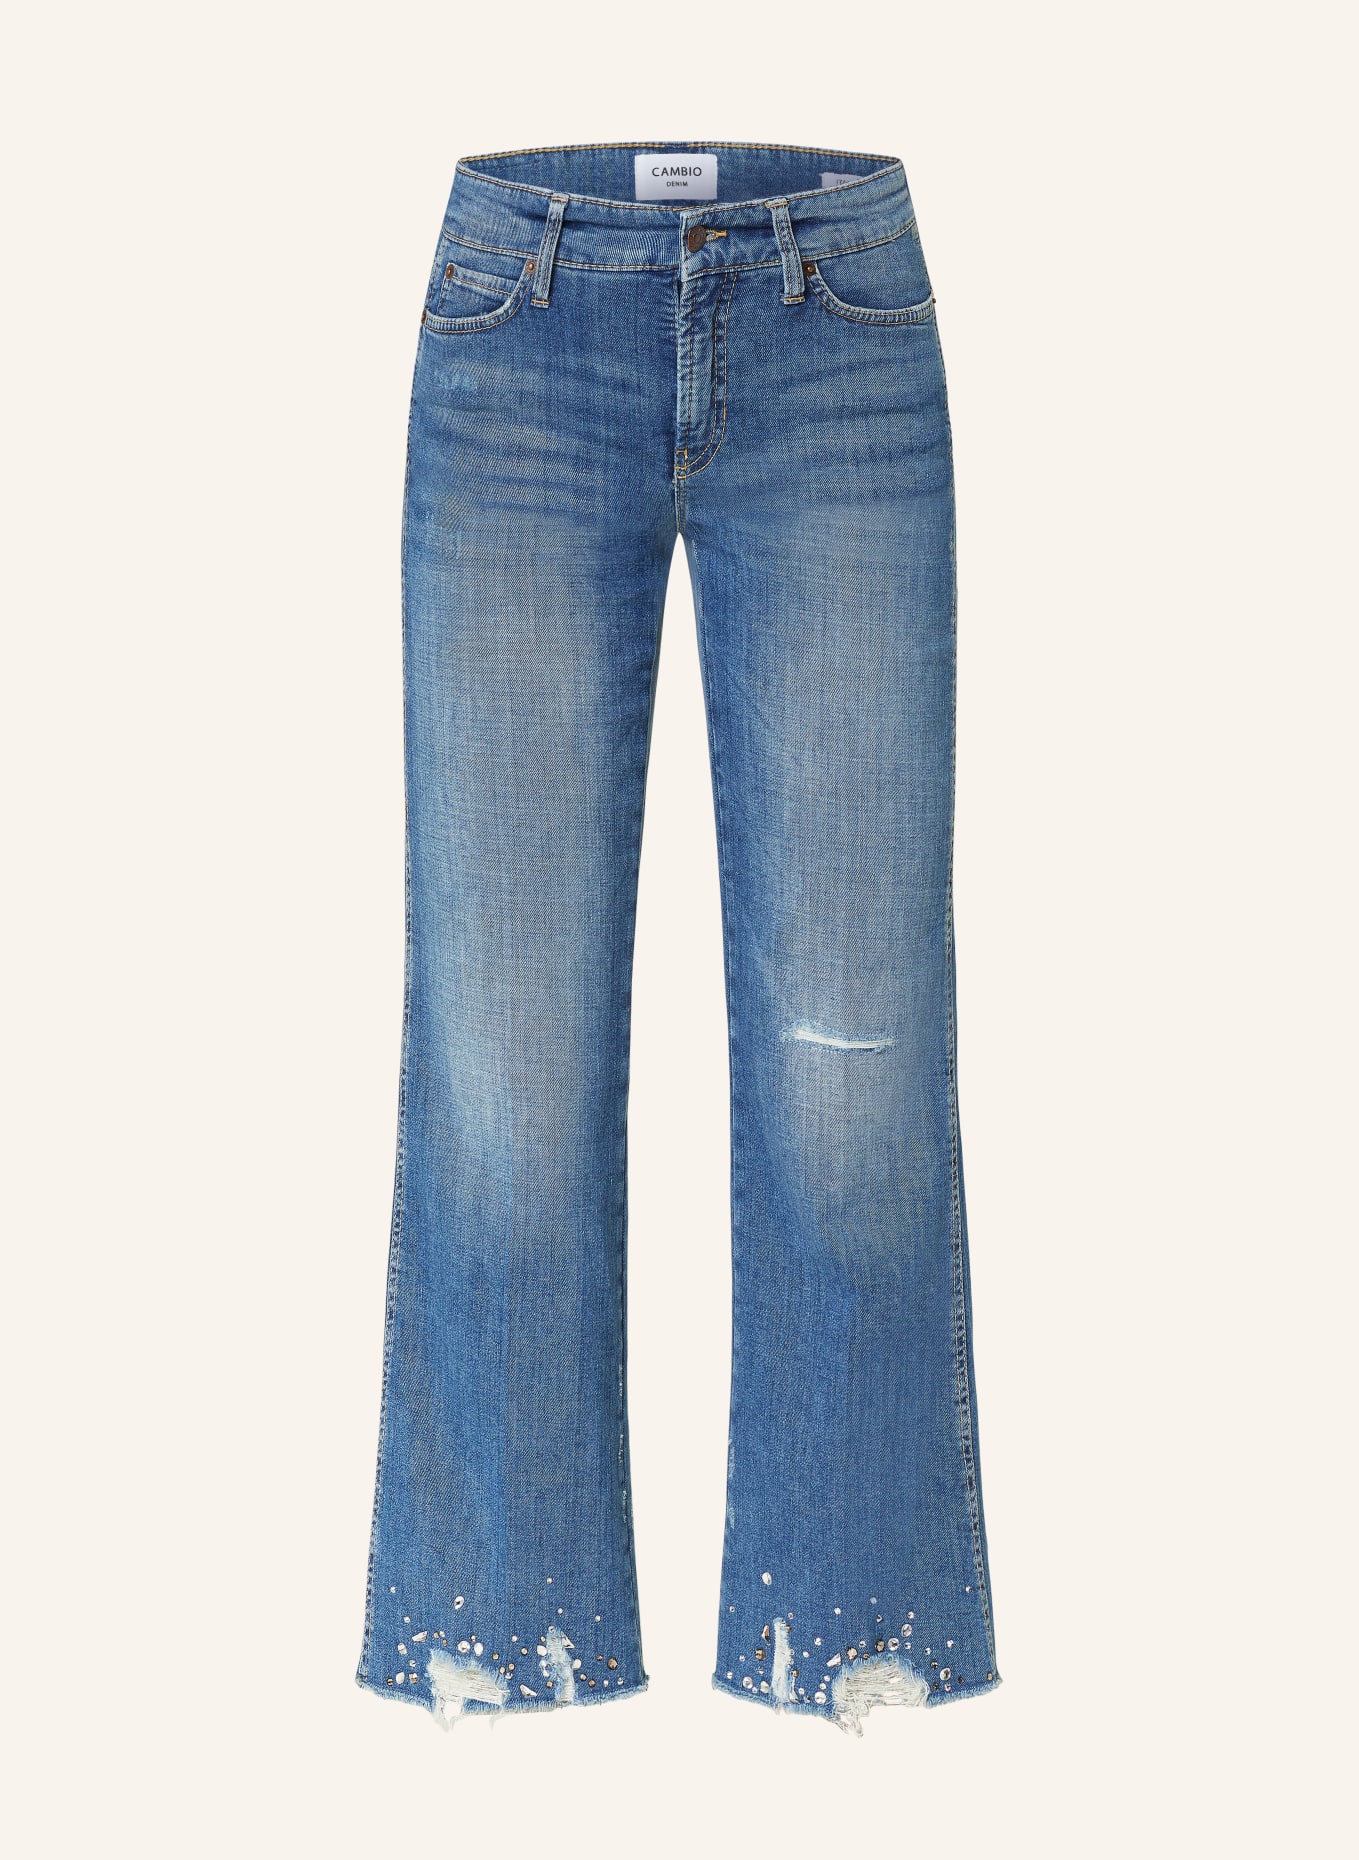 CAMBIO 7/8 jeans FRANCESCA with decorative gems, Color: 5214 vintage dark destroy hem (Image 1)